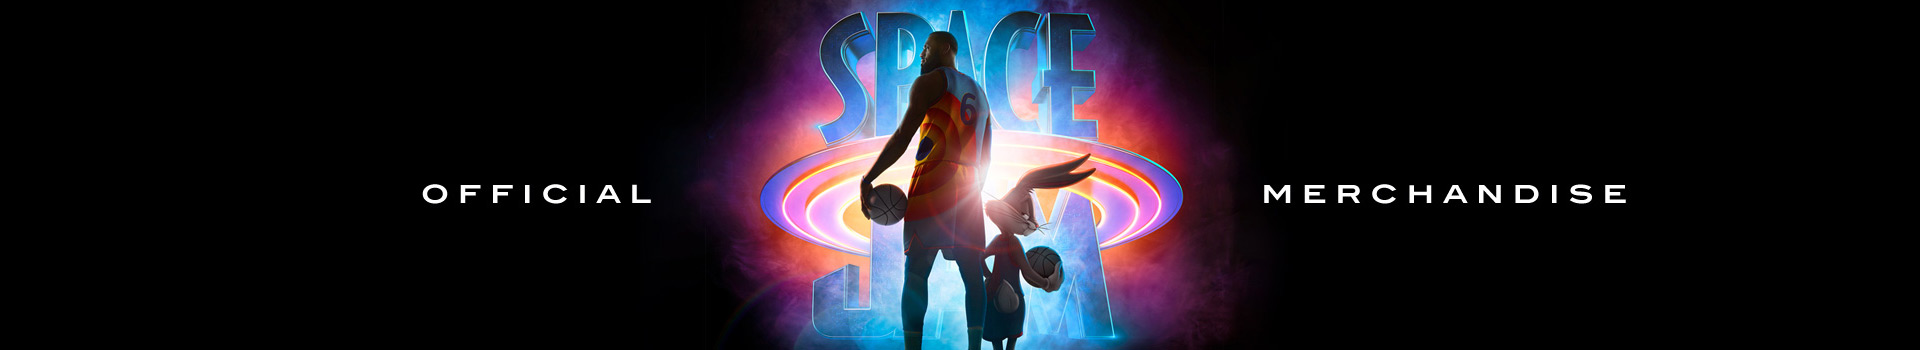 Space Jam - Official Merchandise